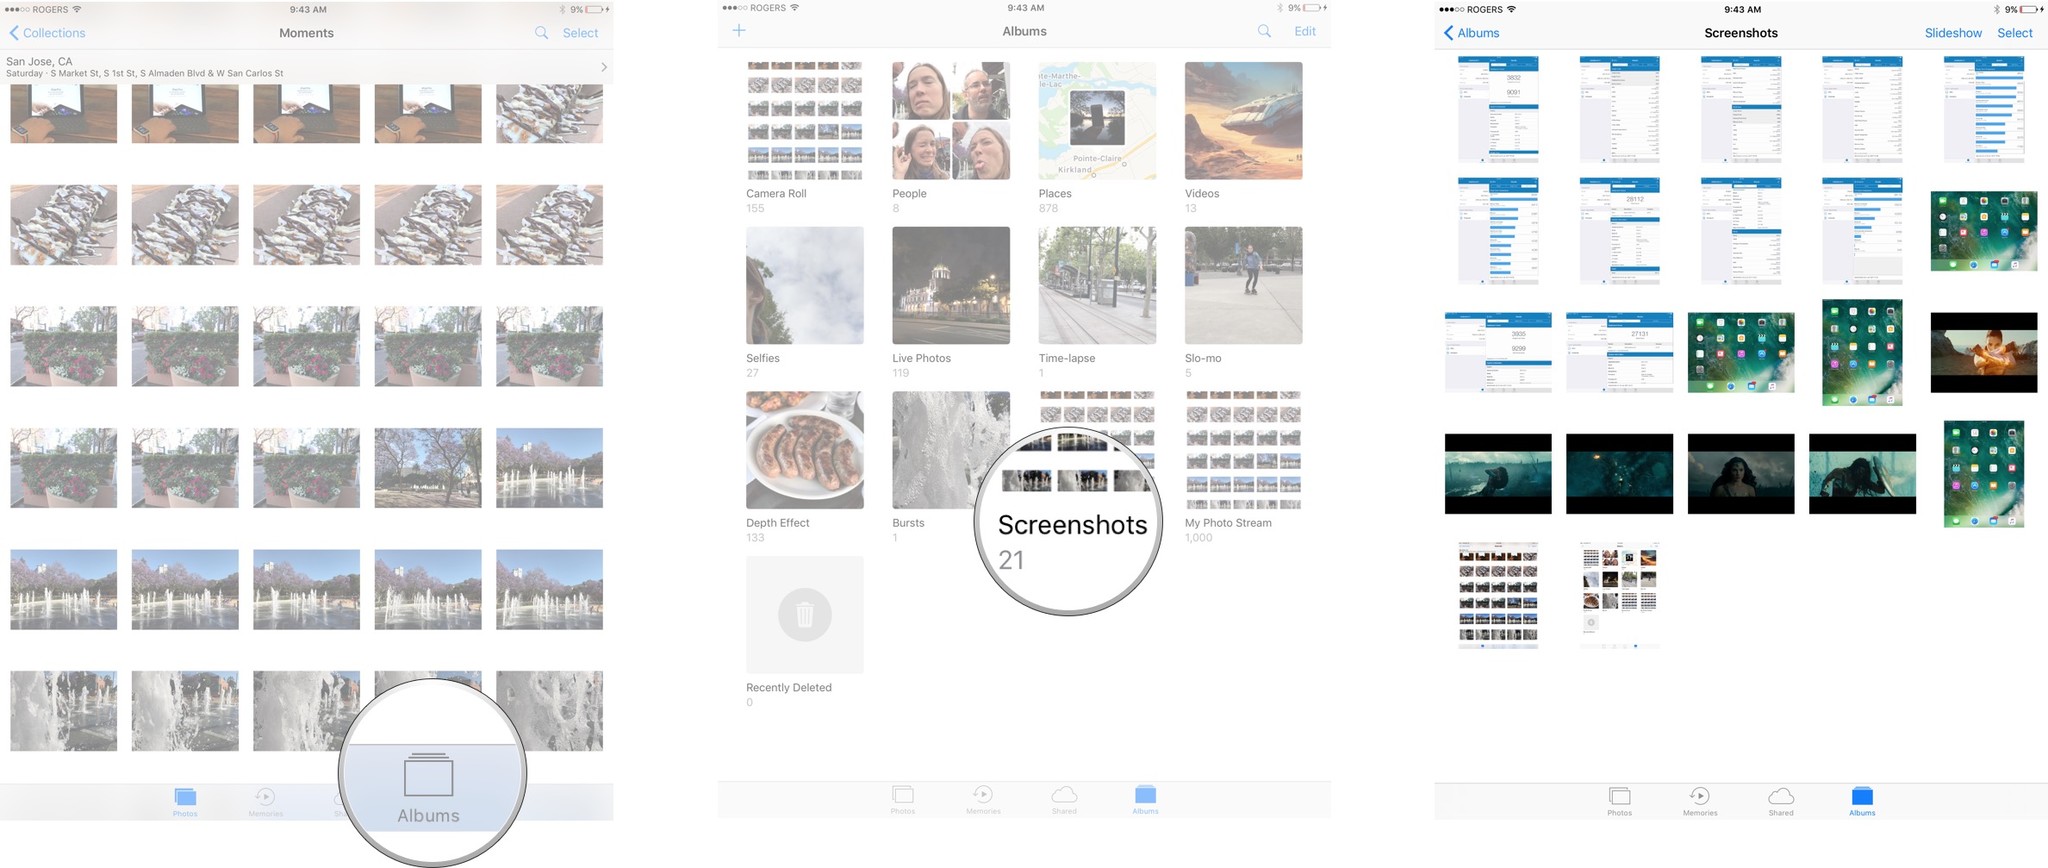 Finding screenshots in the Photos app under Albums, Screenshots